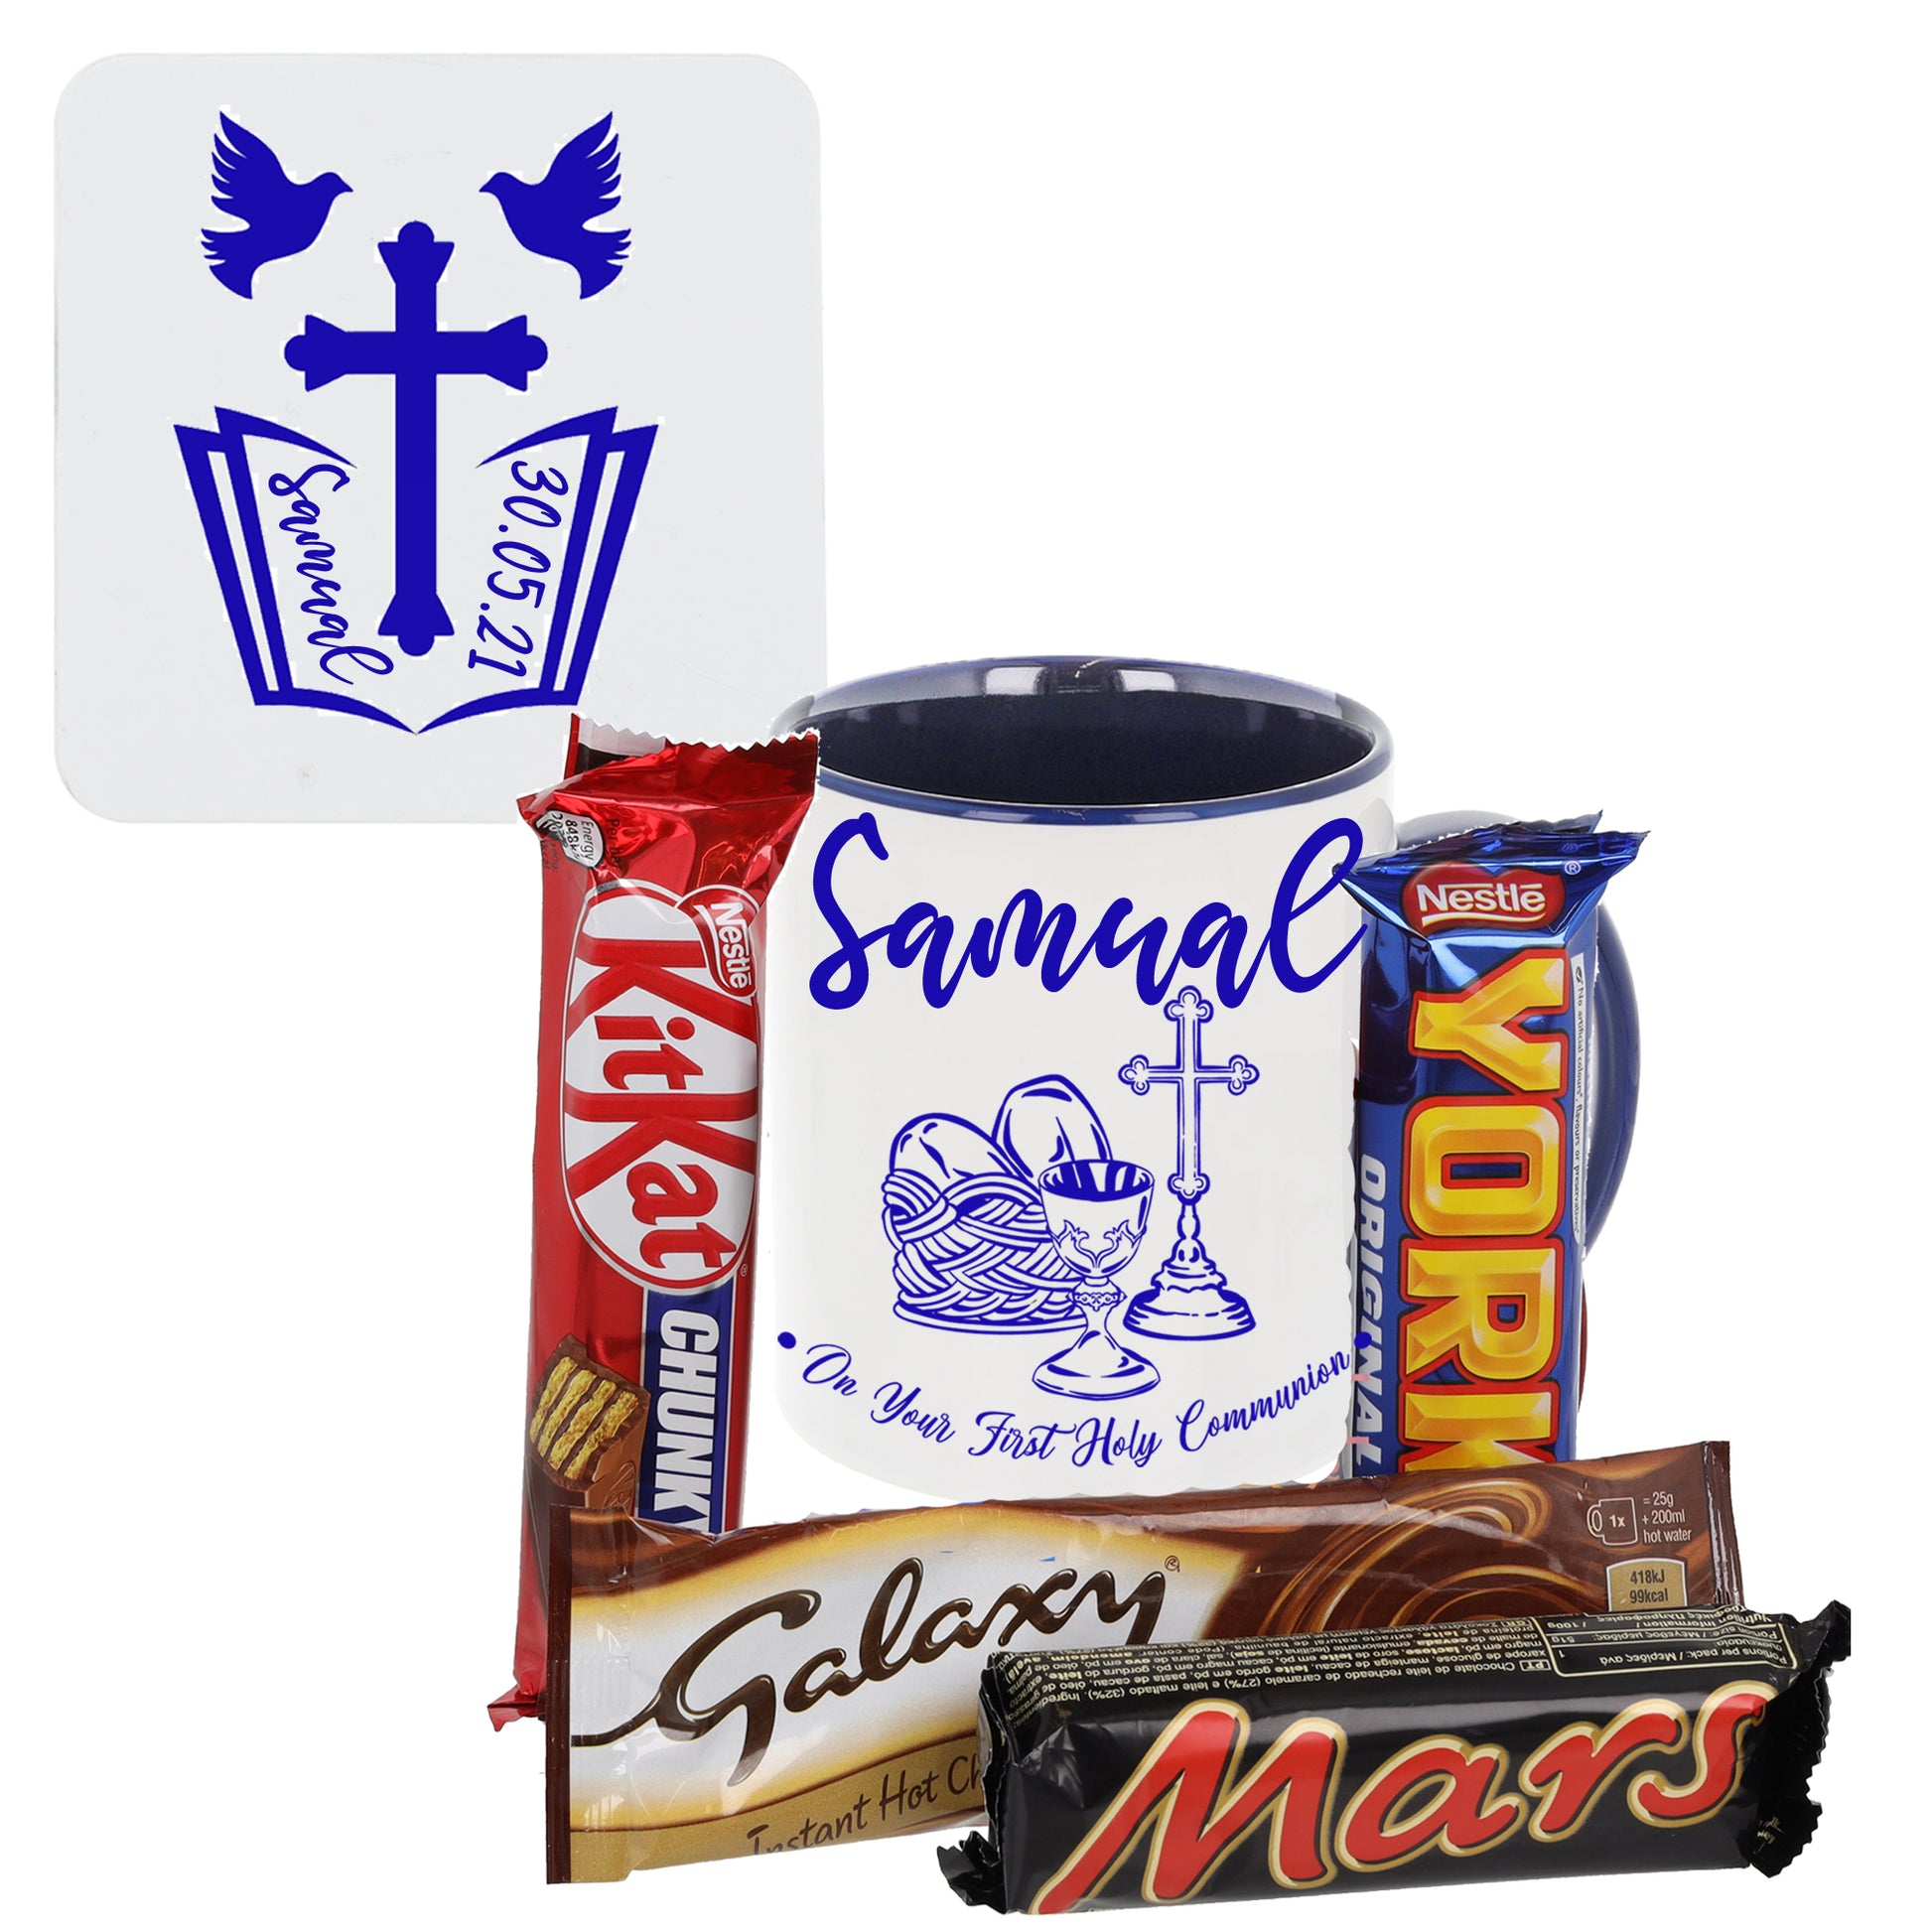 Personalised First Holy Communion Mug & Coaster Set  - Always Looking Good -   